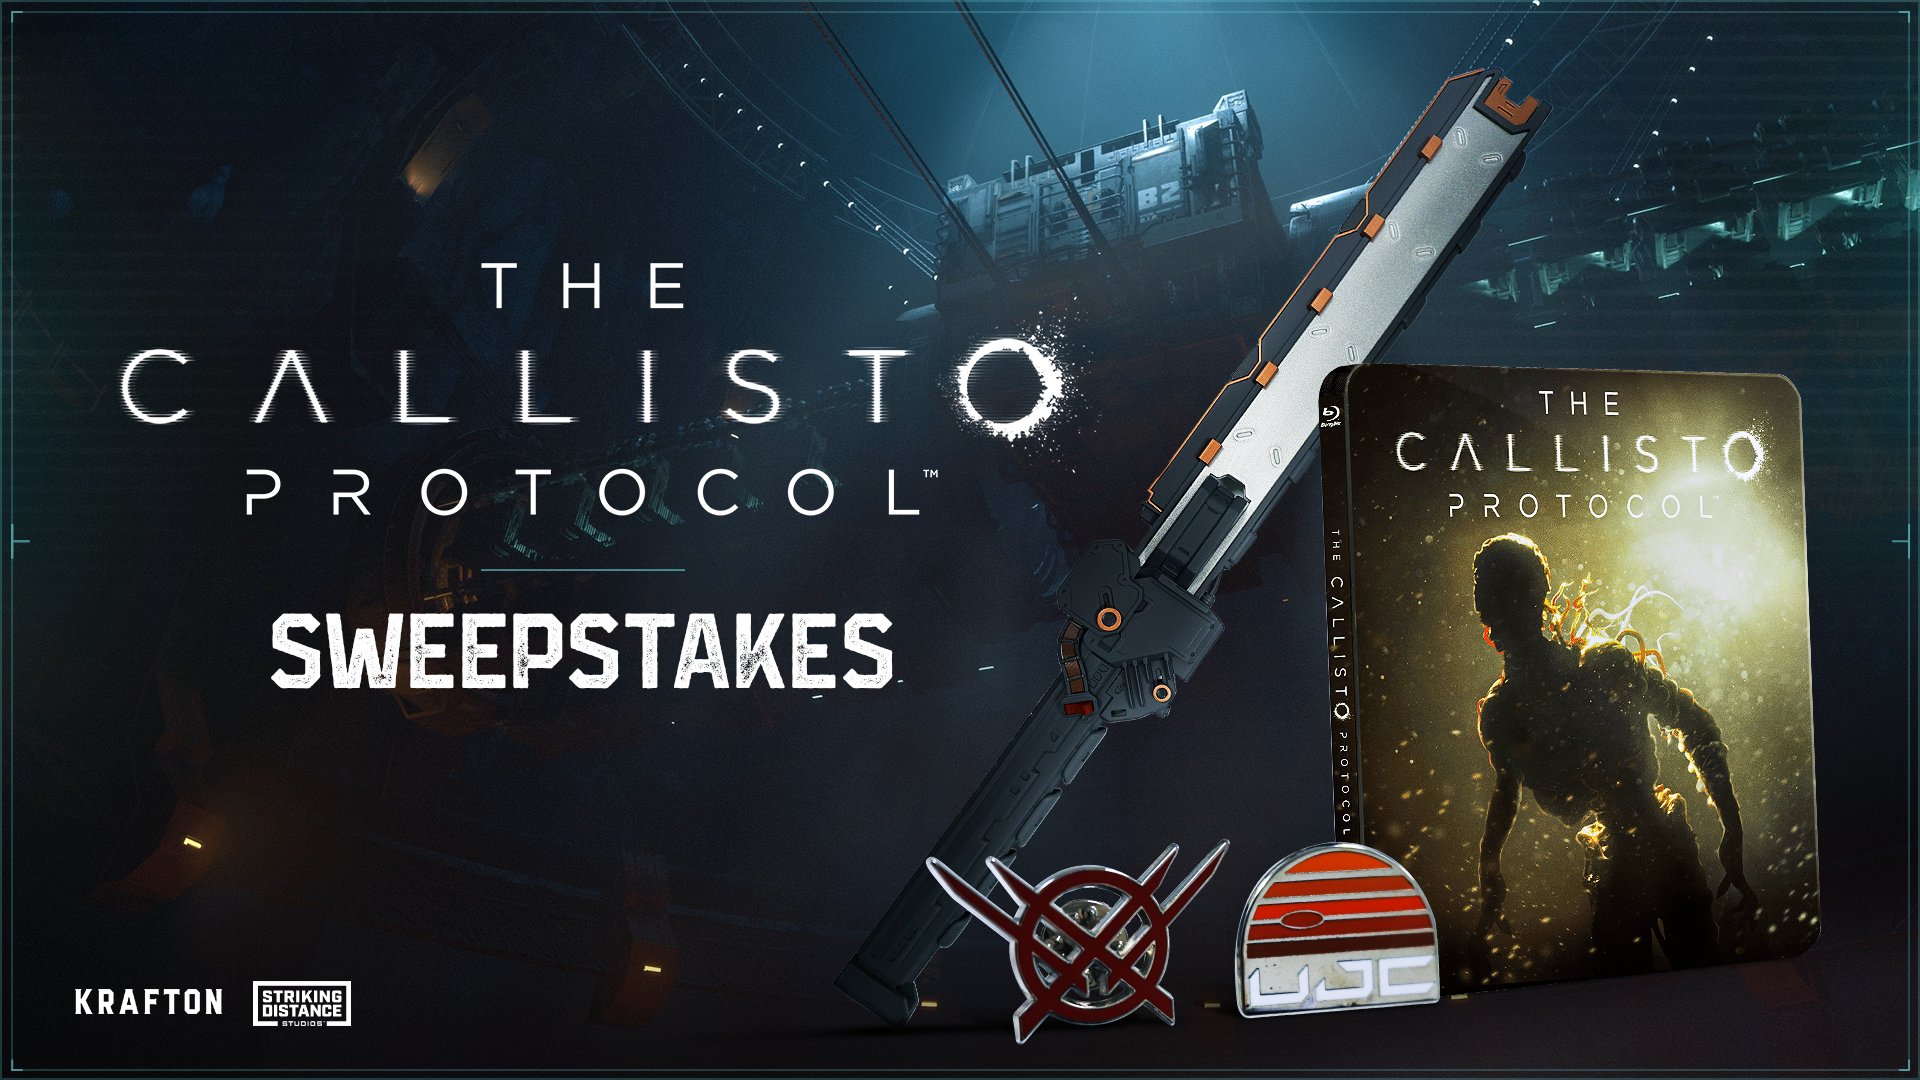 The Callisto Protocol Update Adds Hardcore Mode, DLC Skins